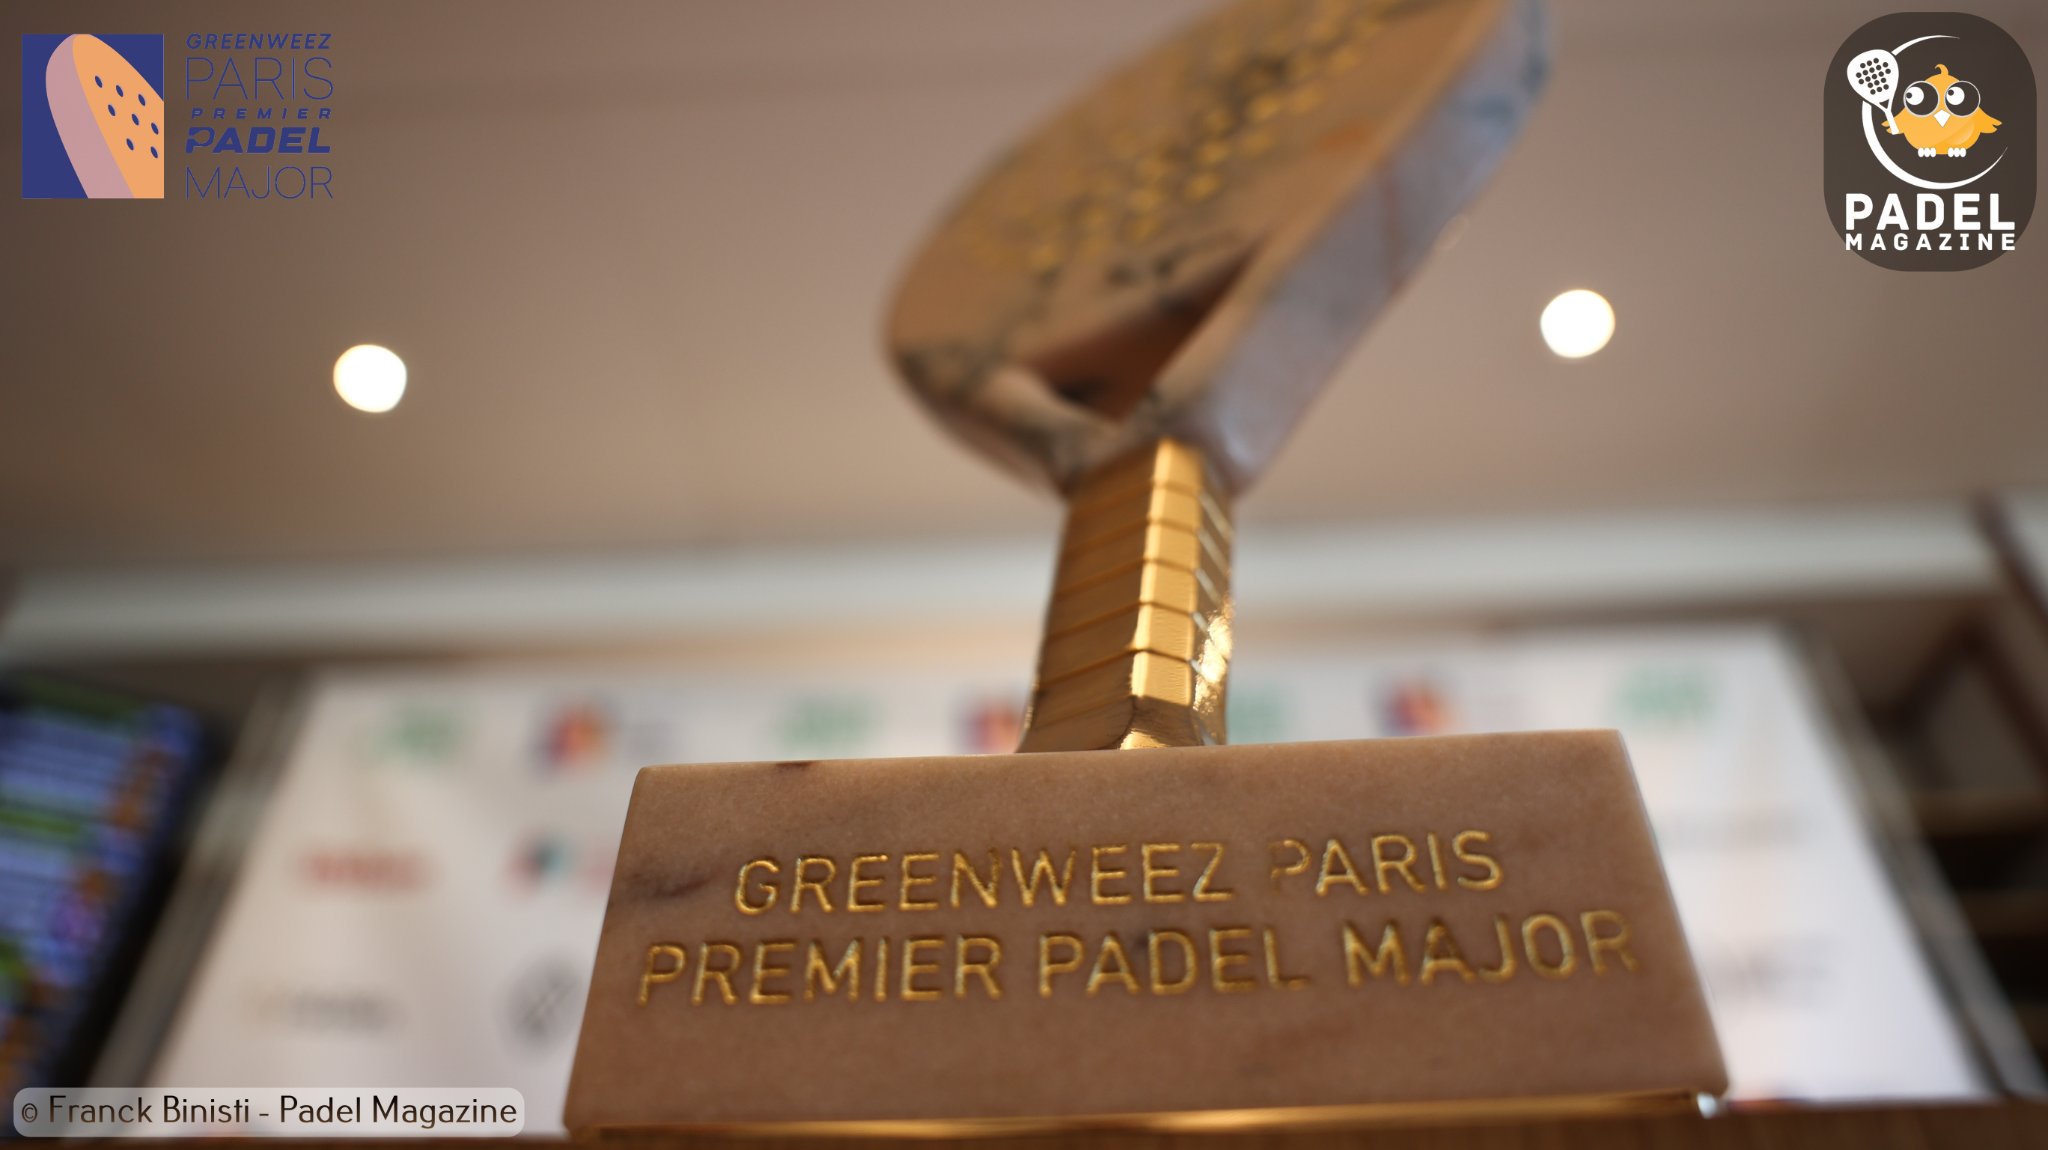 greenweez paris premier padel major 2022 trofeum Roland Garros